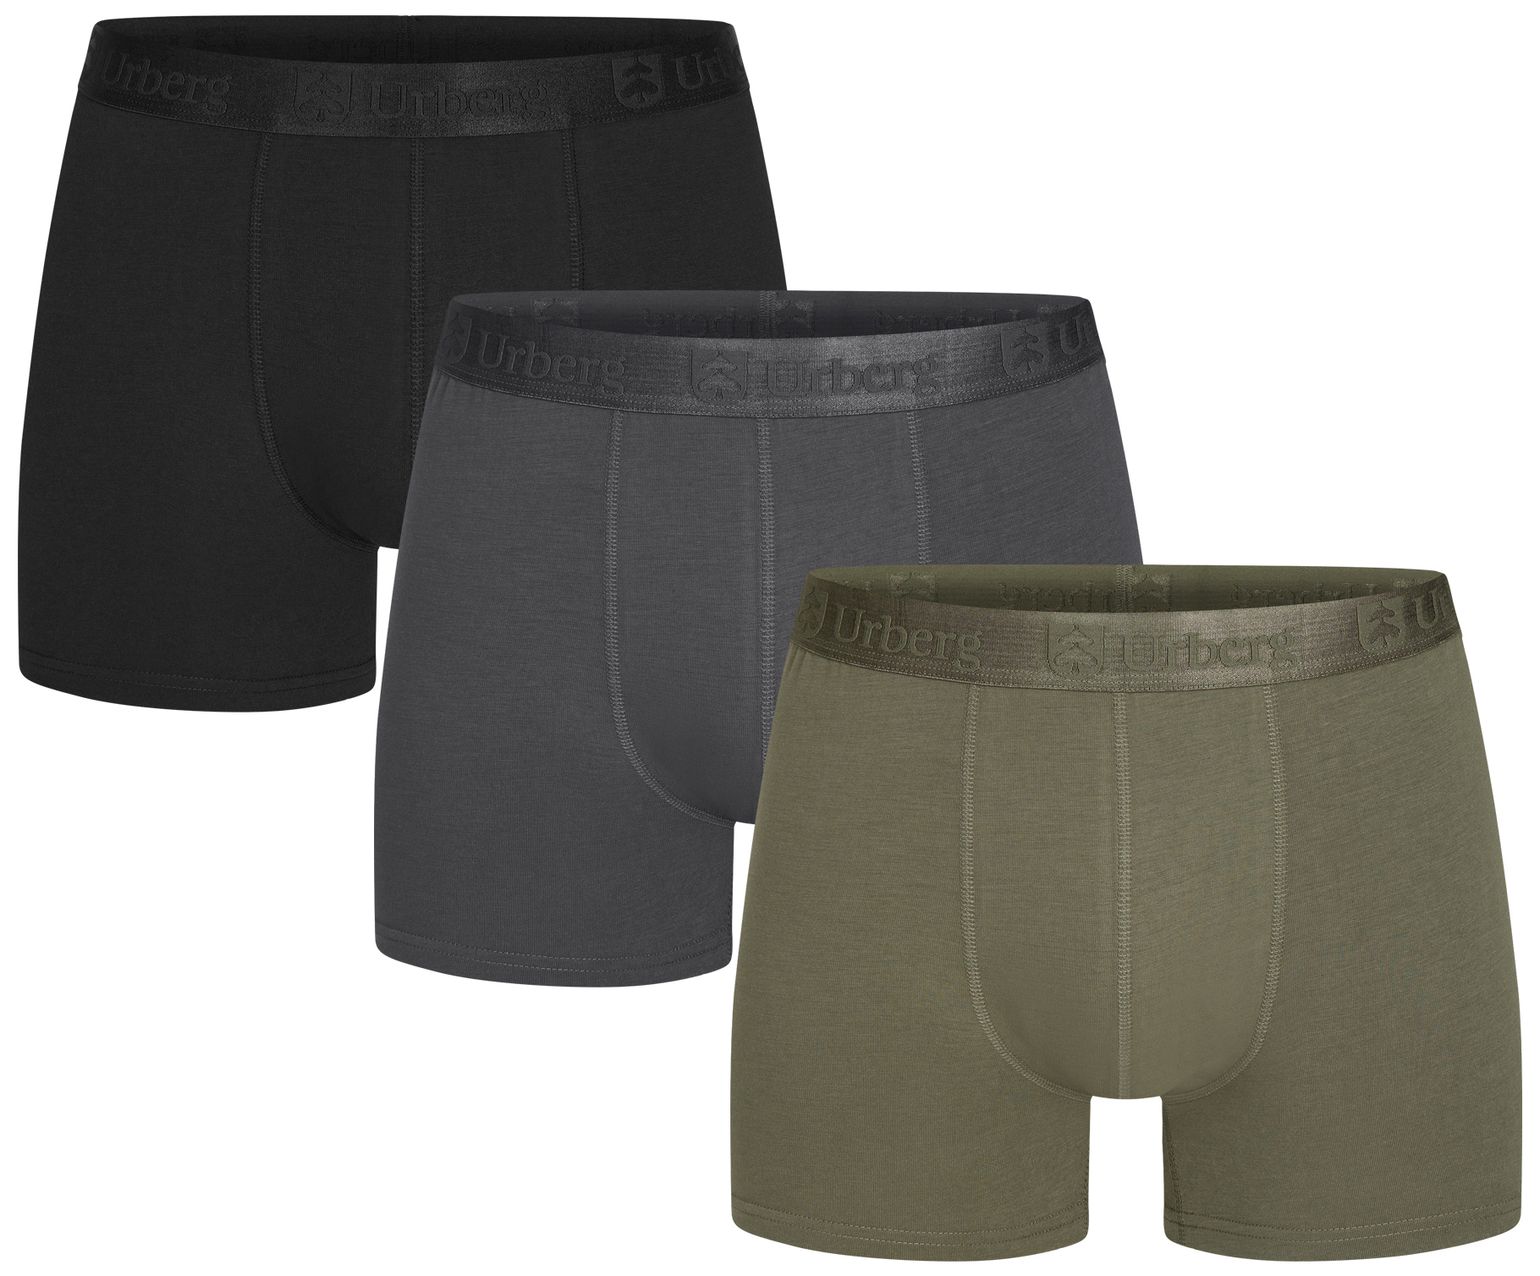 Urberg Men's Isane 3-pack Bamboo Boxers Grey/Black/Green